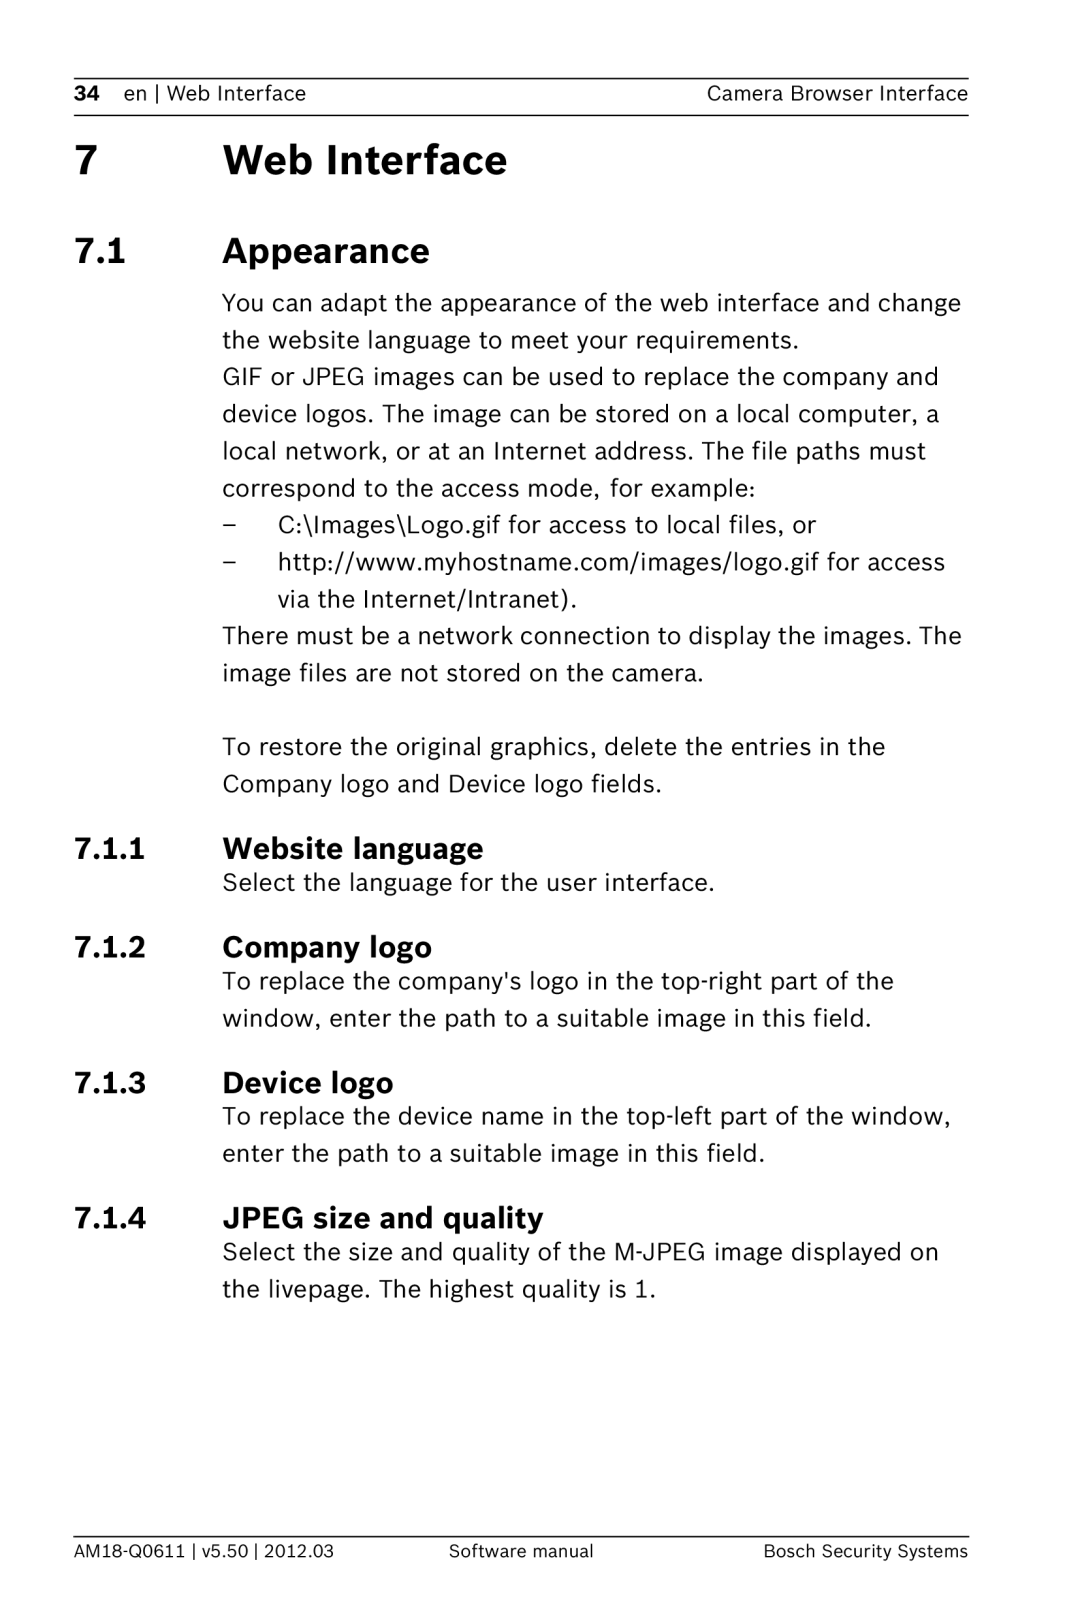 Bosch Appliances FW5.50 7Web Interface, 7.1Appearance, 7.1.1Website language, 7.1.2Company logo, 7.1.3Device logo 